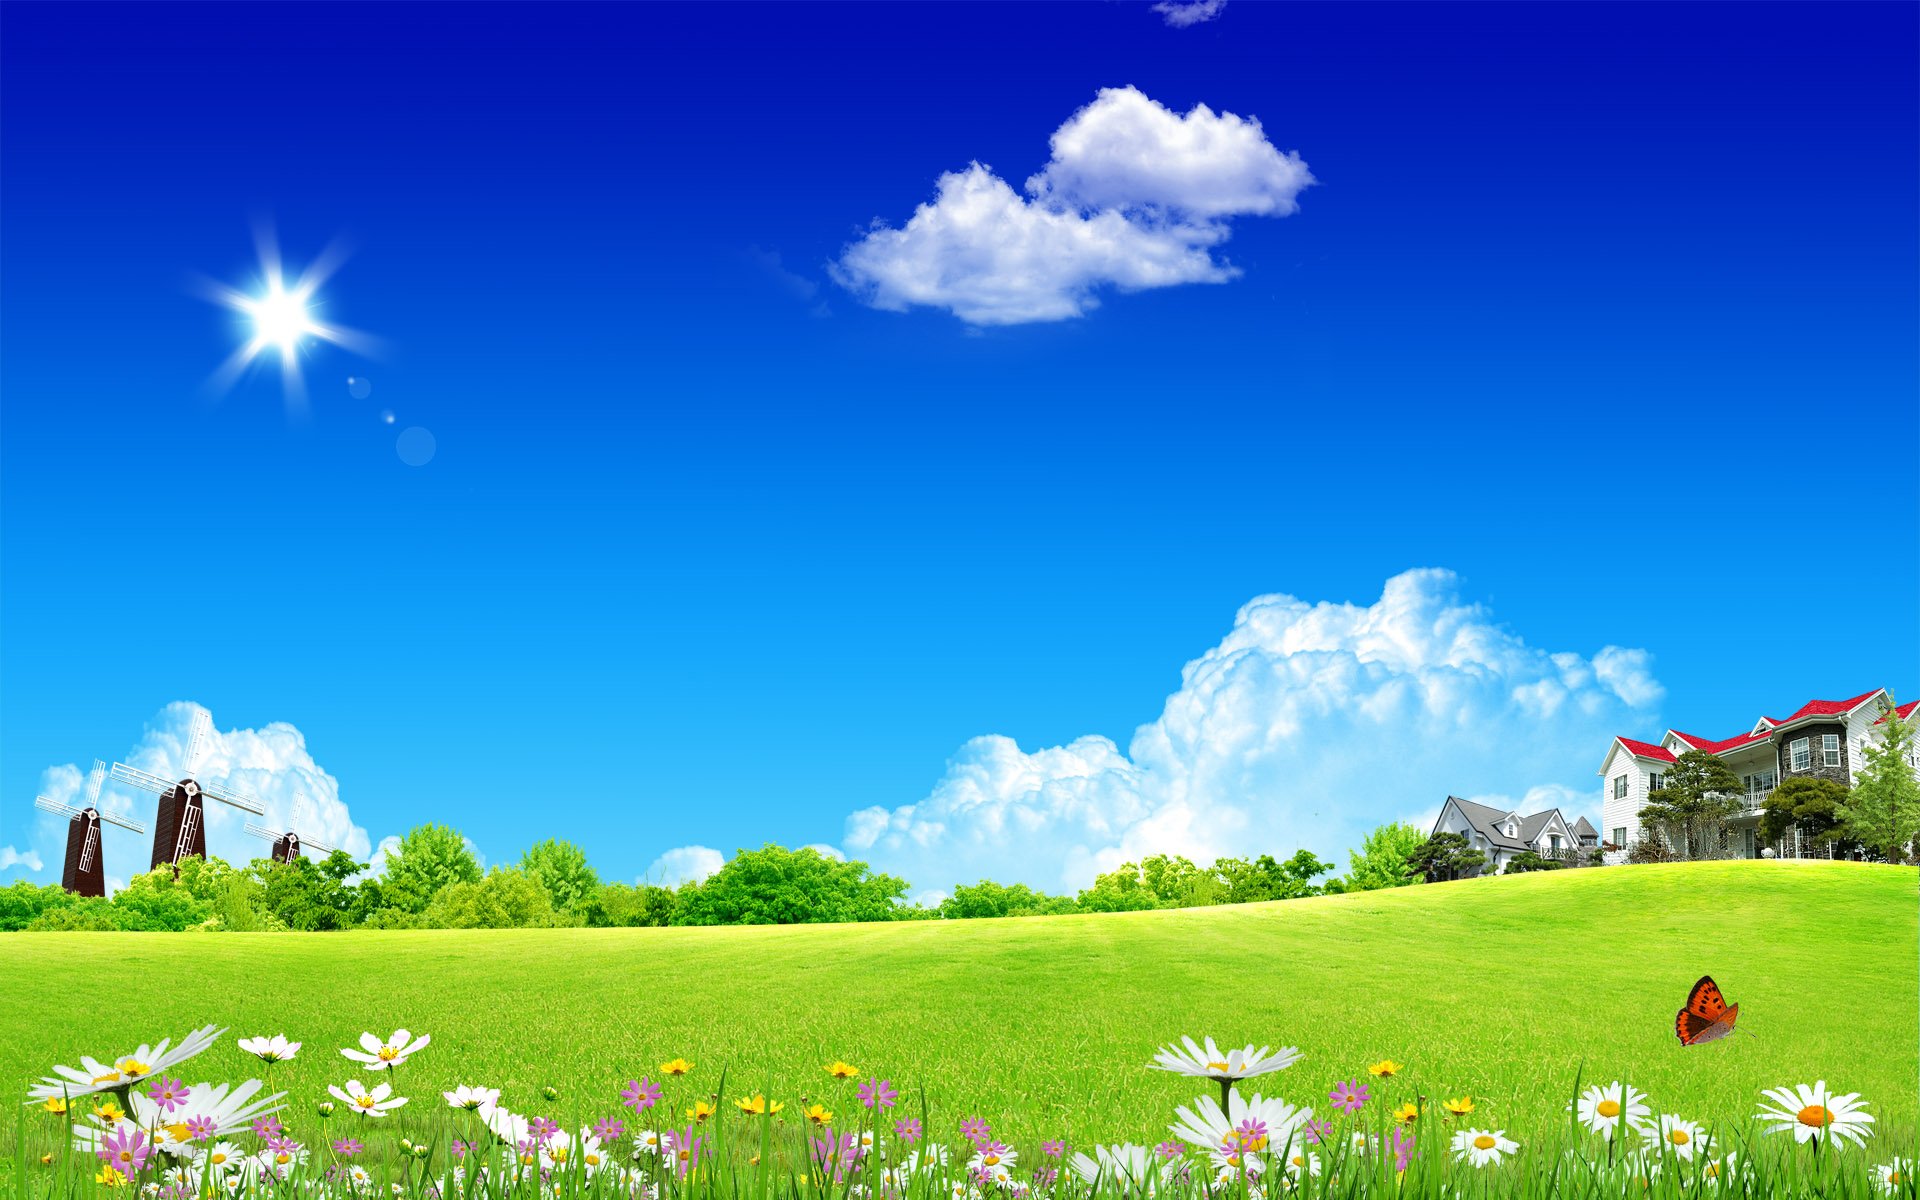  mi9comfree summer fantasy landscape for desktop wallpaper 80964html 1920x1200